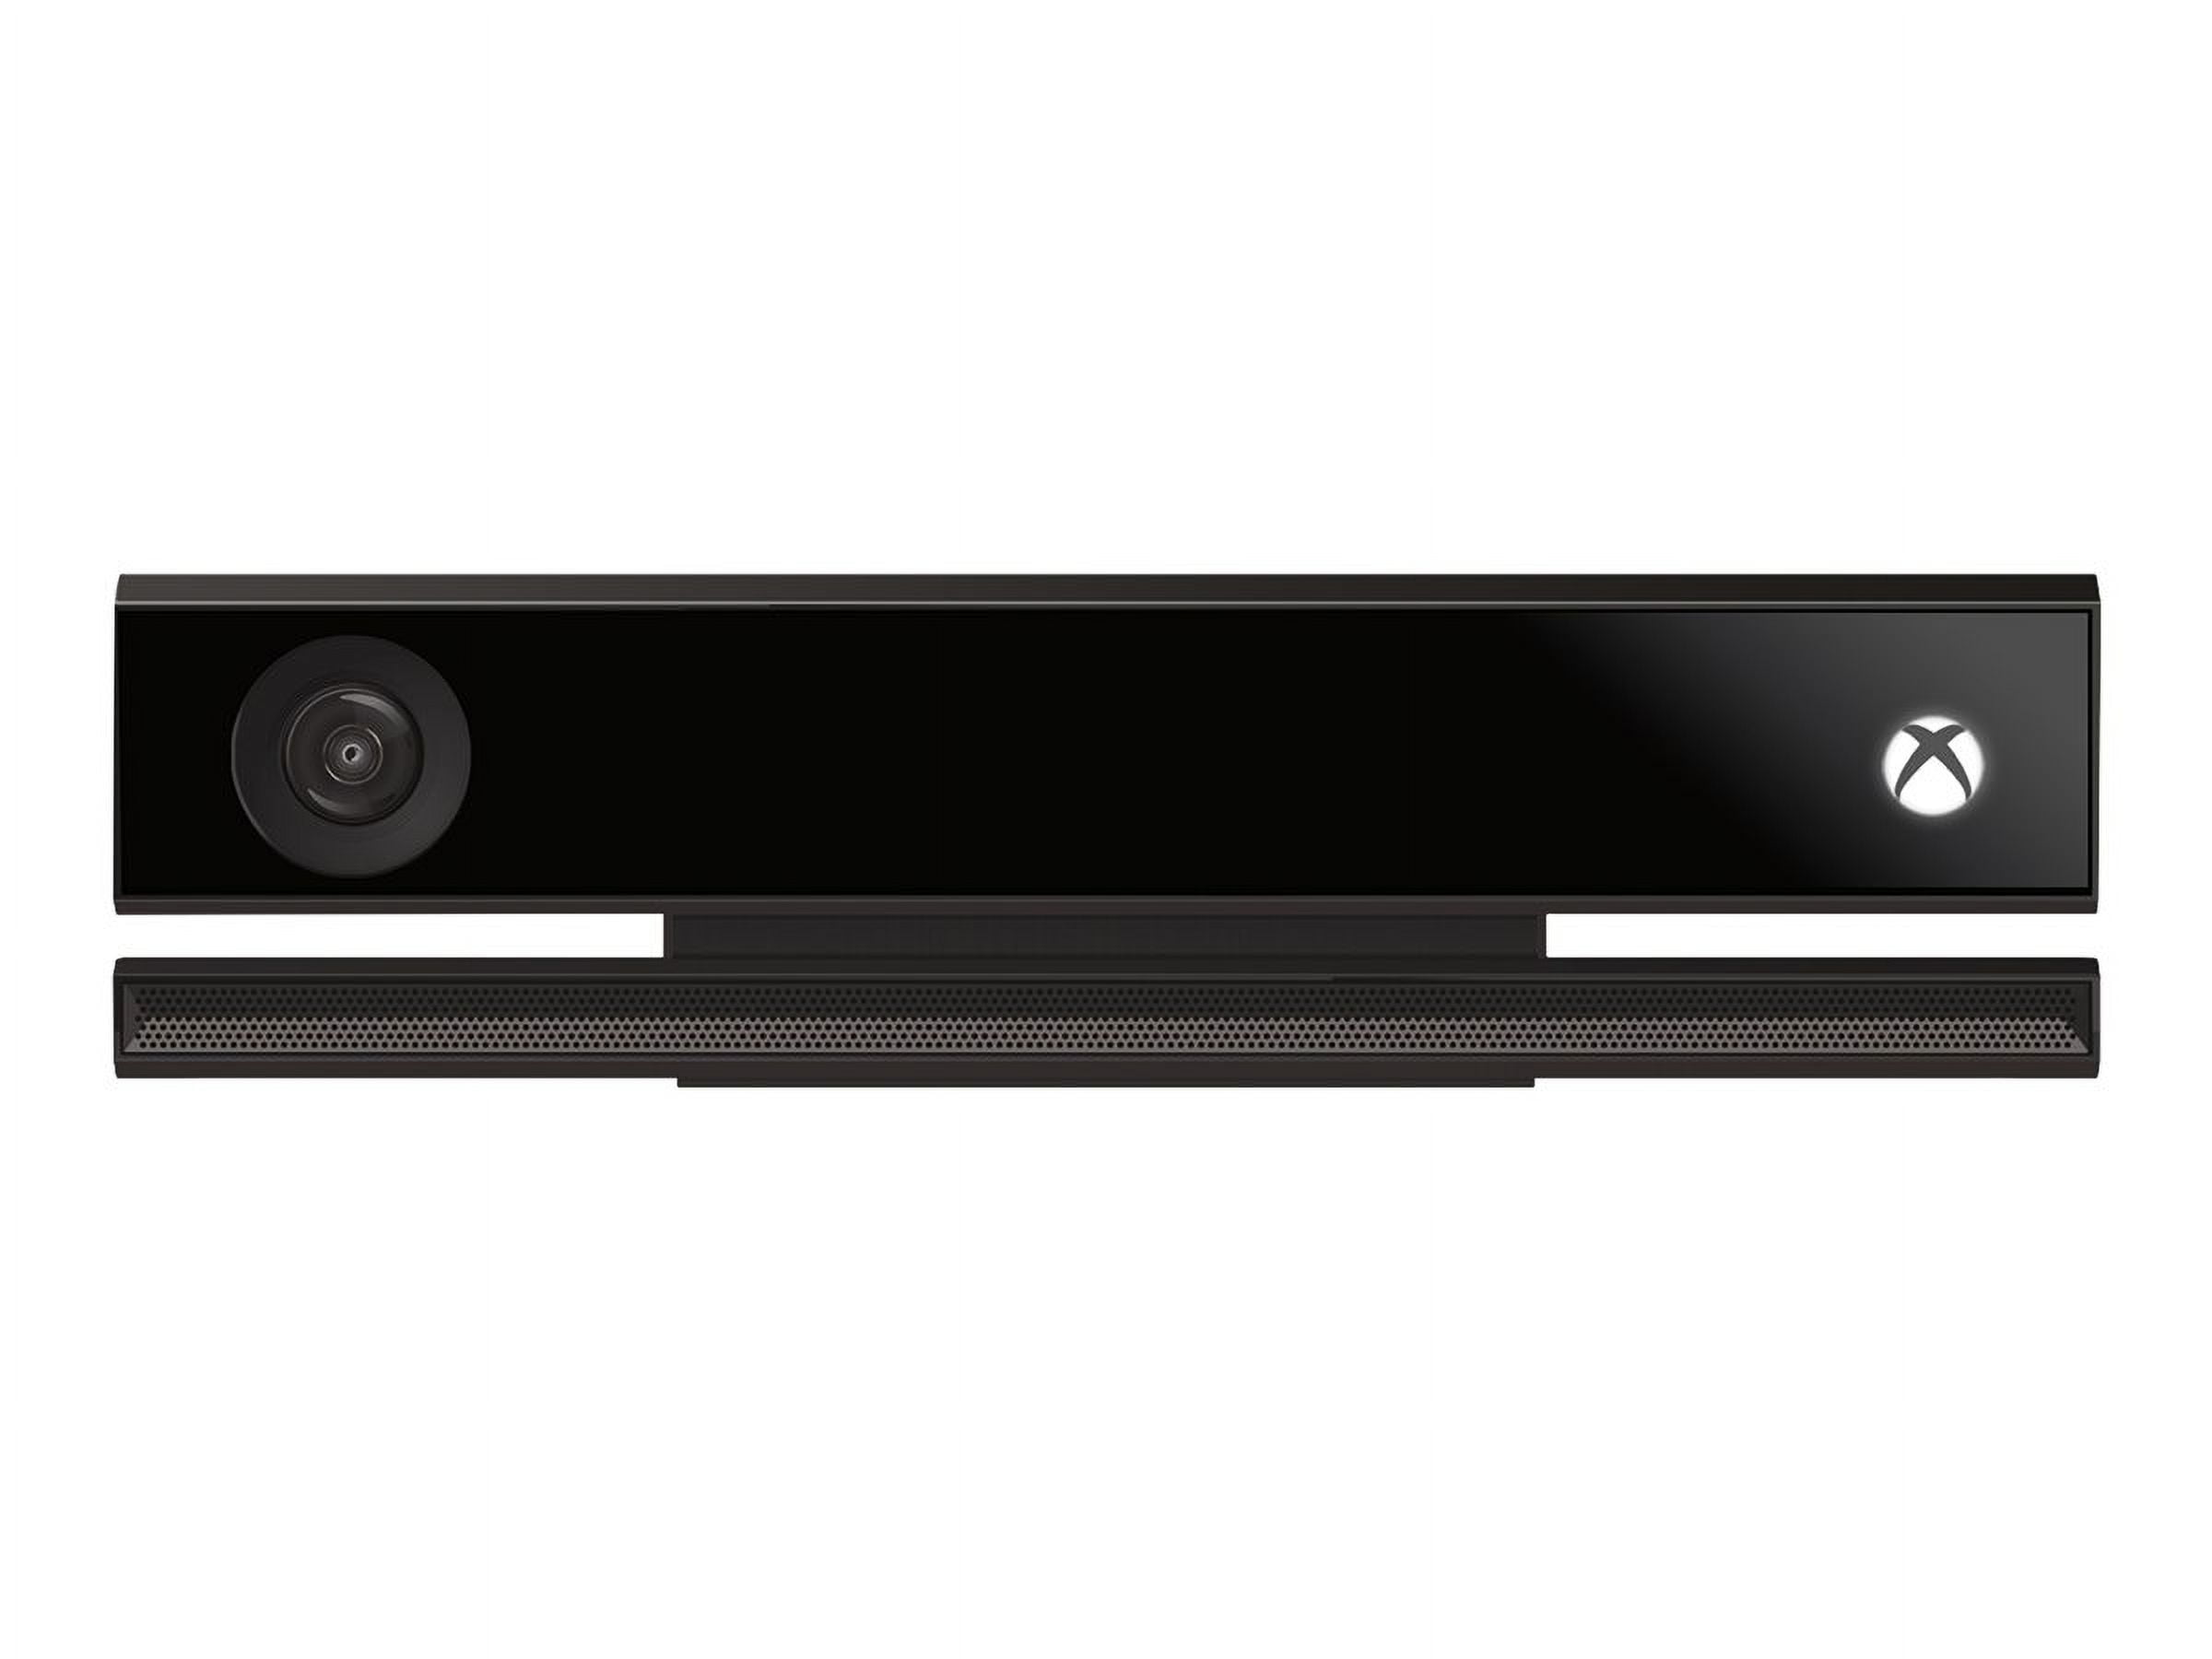 Console XBOX ONE 500 GB com leitor Blu-ray + Novo Sensor Kinect +